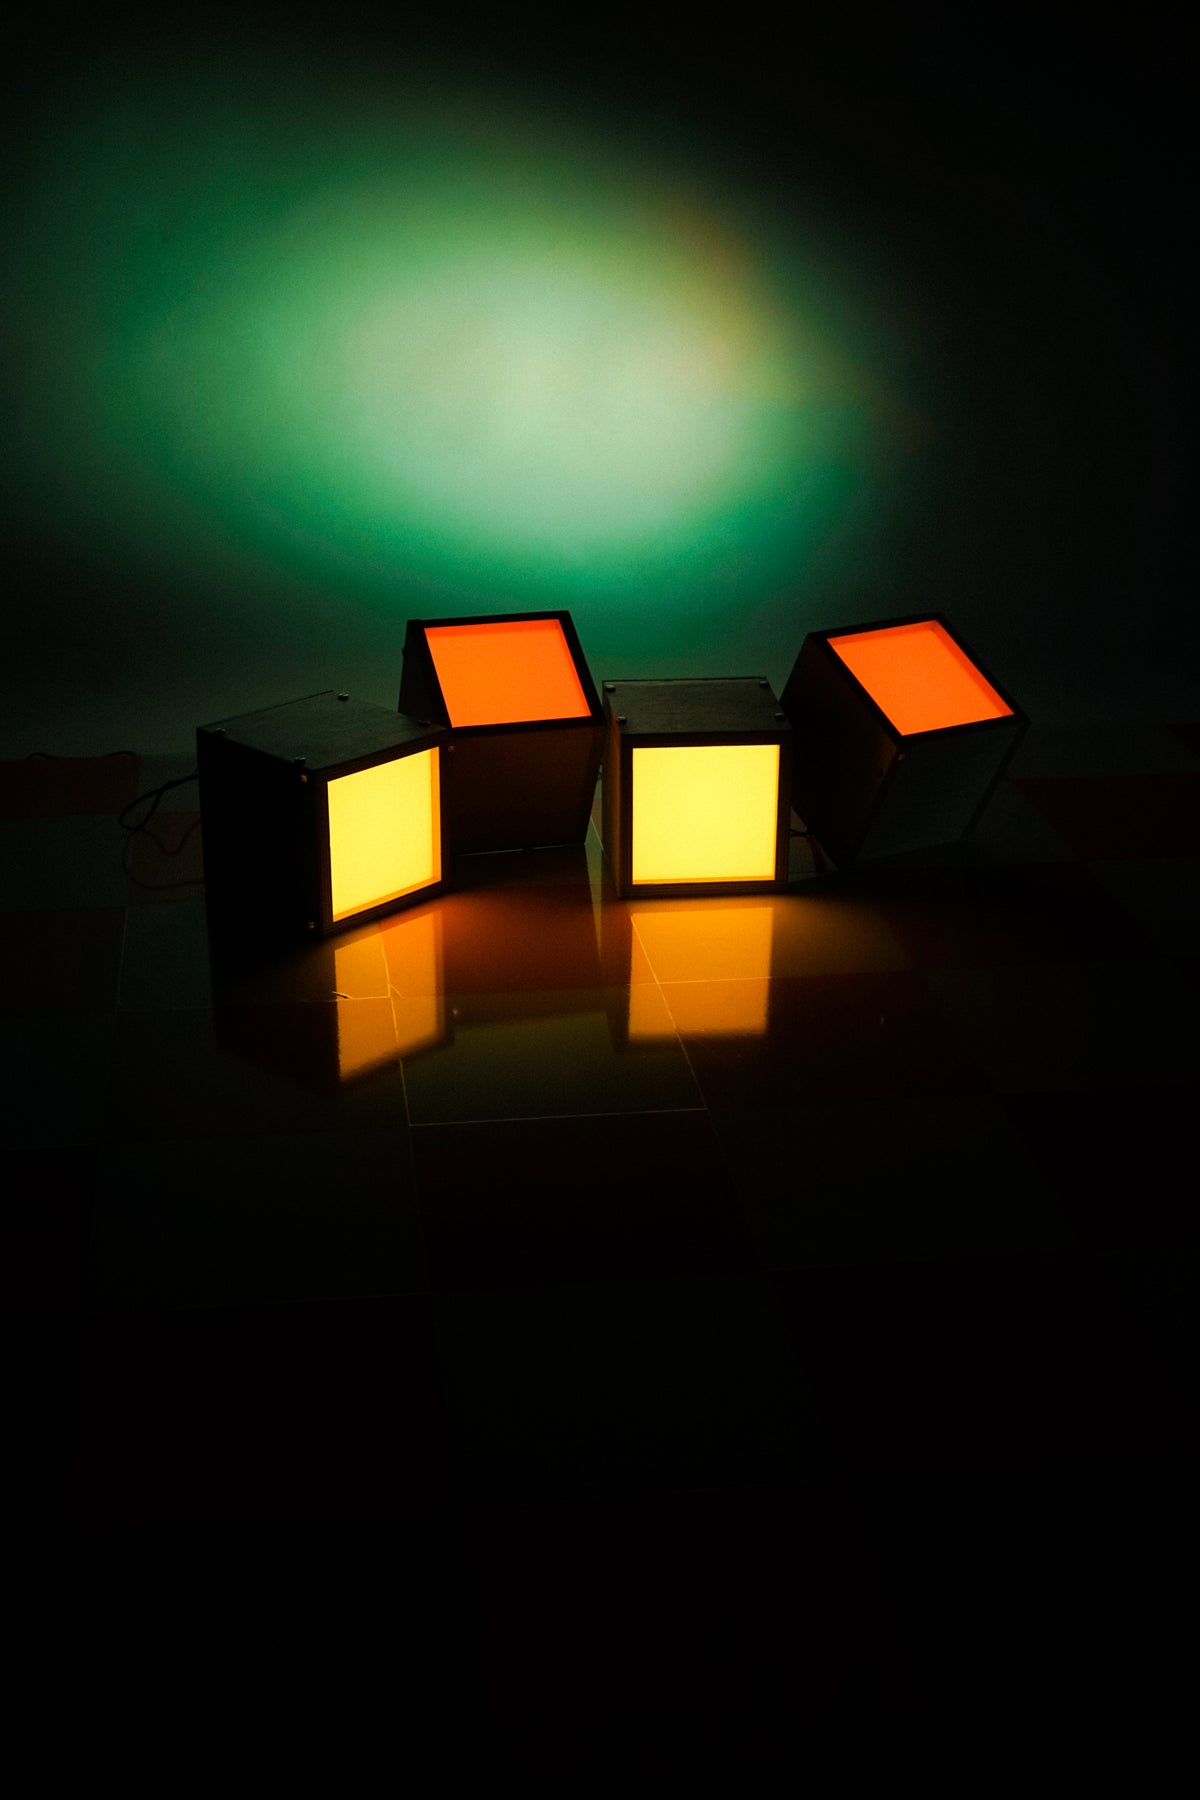 Offcut Cube Lightbox